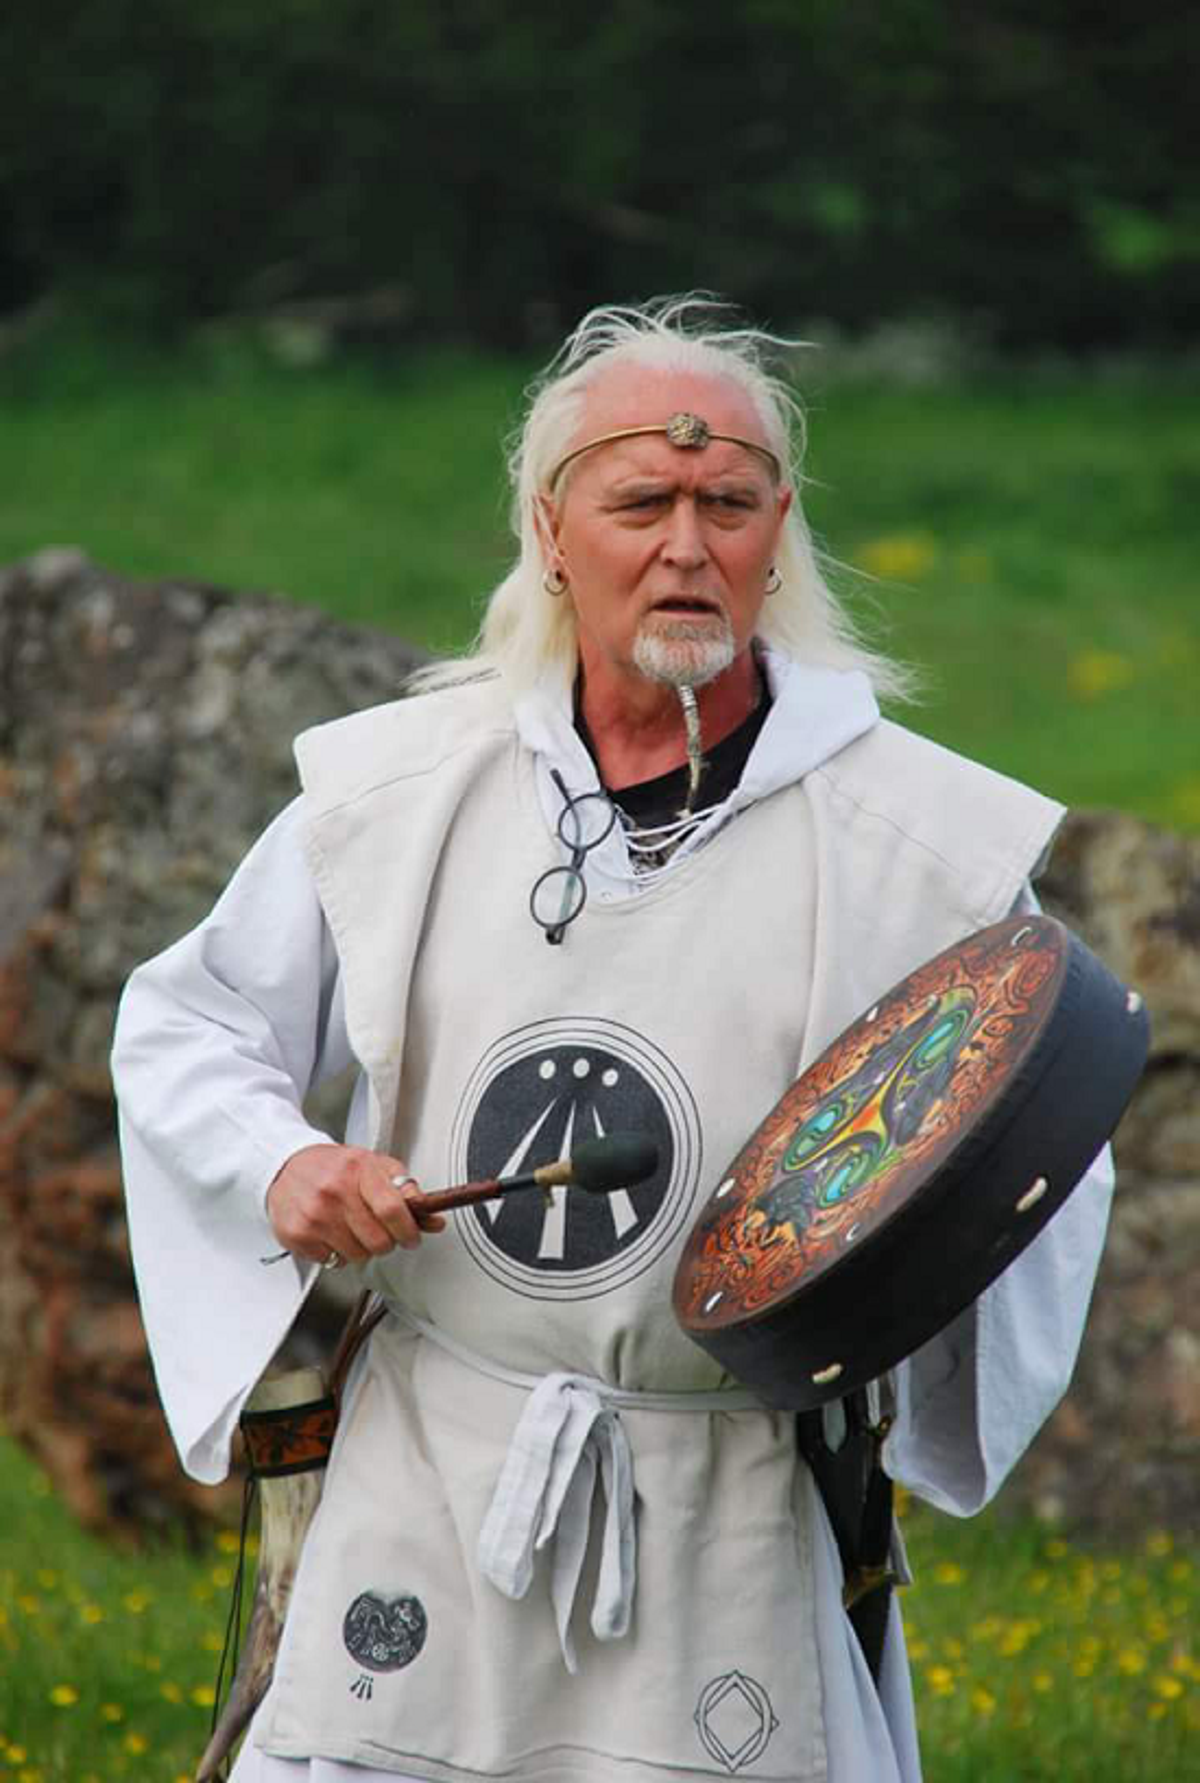 Druid chief blasts Just Stop Oil random attention seeking after Stonehenge stunt